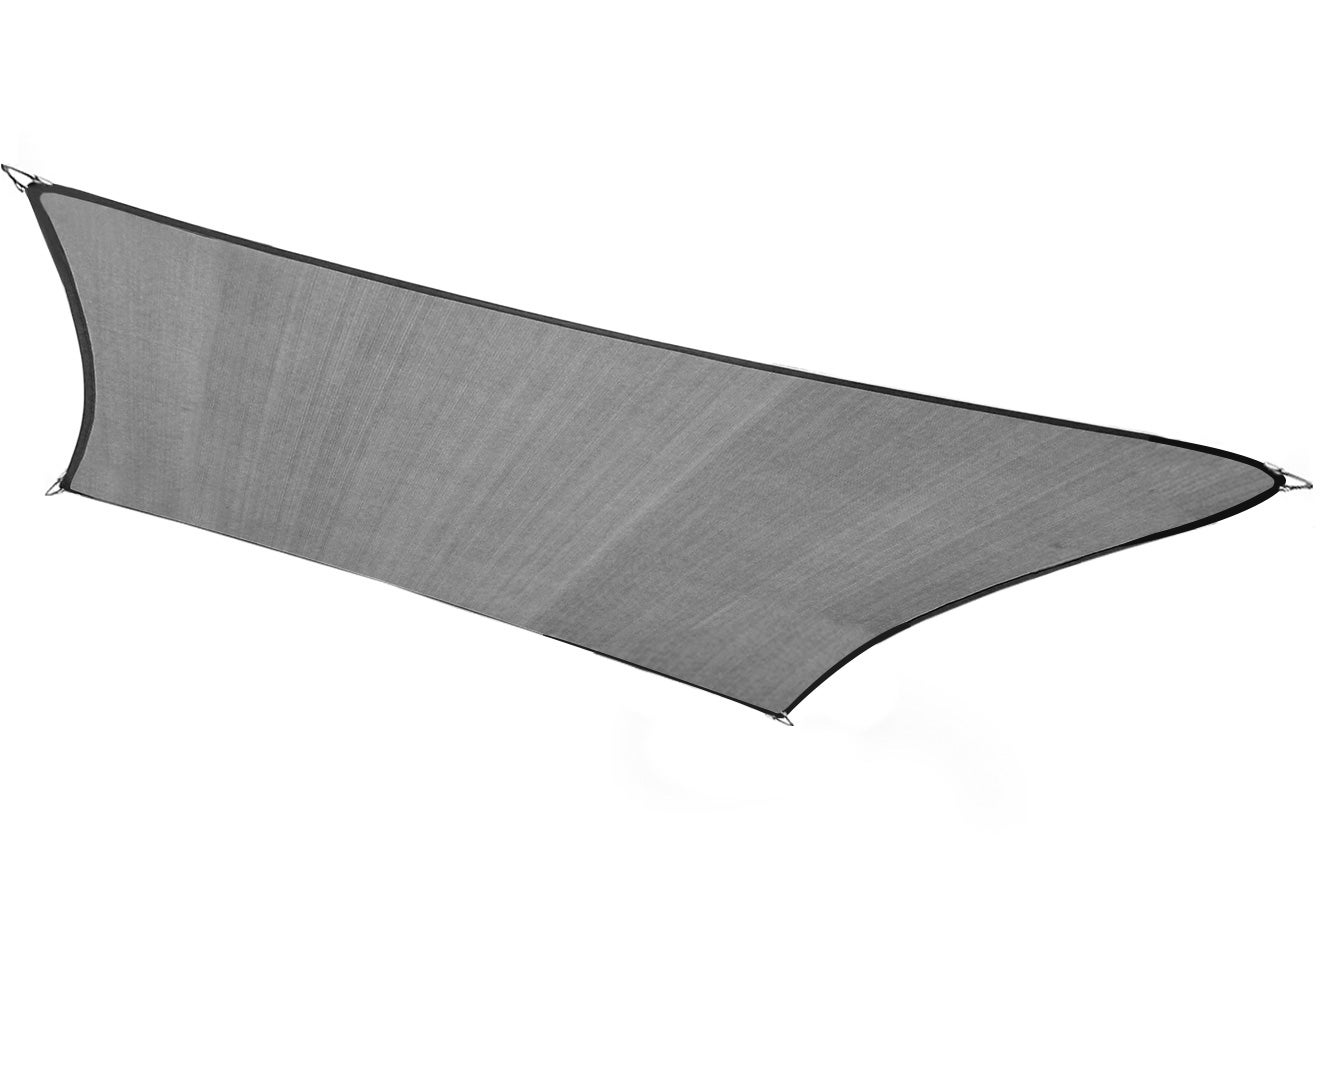 Wallaroo 3m X 2.5m Outdoor Sun Shade Sail Canopy Sailcloth - Grey Cloth Rectangle